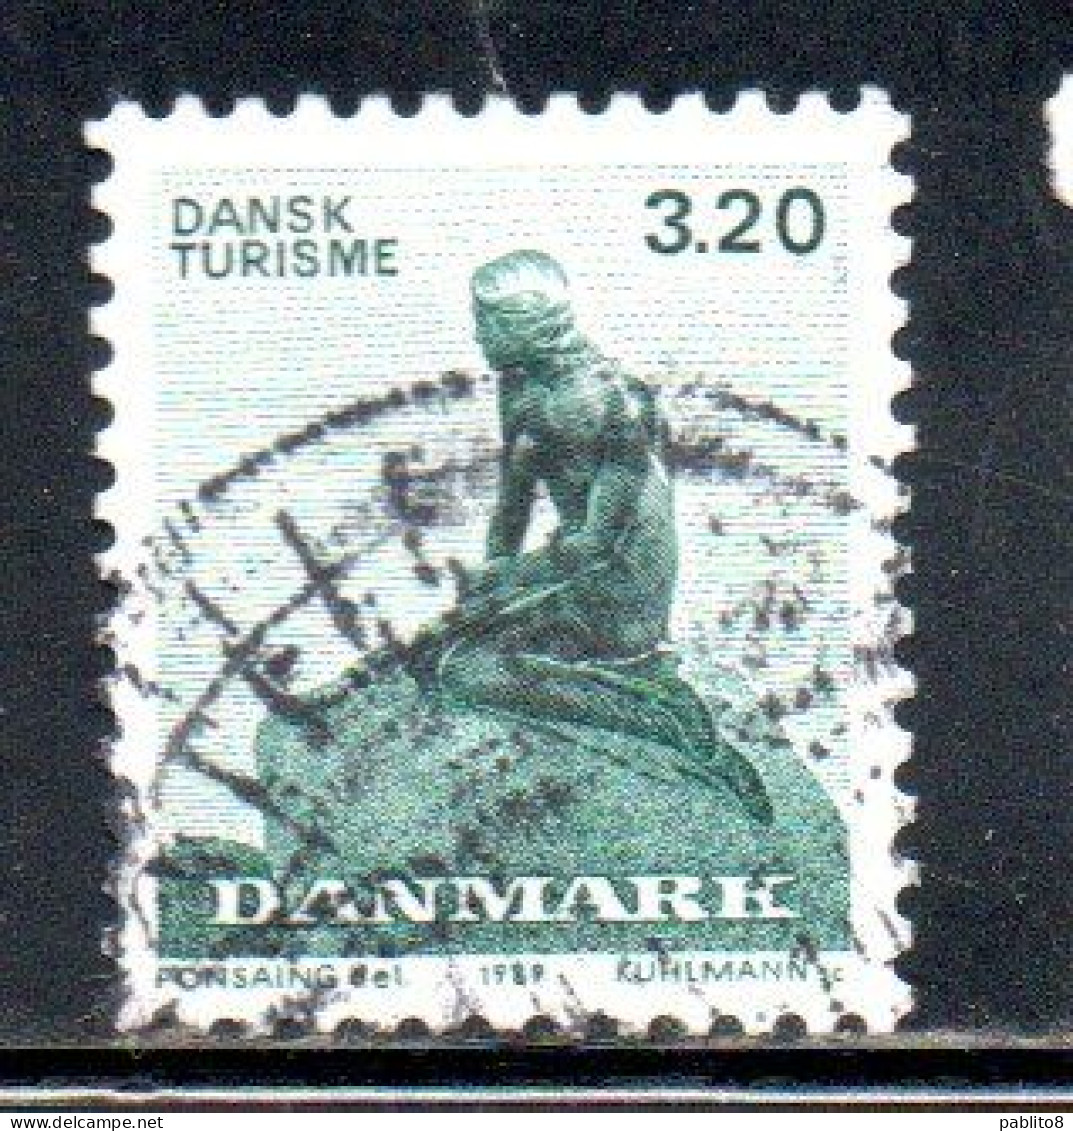 DANEMARK DANMARK DENMARK DANIMARCA 1989 TOURISM INDUSTRY THE LITTLE MERMAID LA SIRENETTA 3.20k USED USATO OBLITERE' - Used Stamps